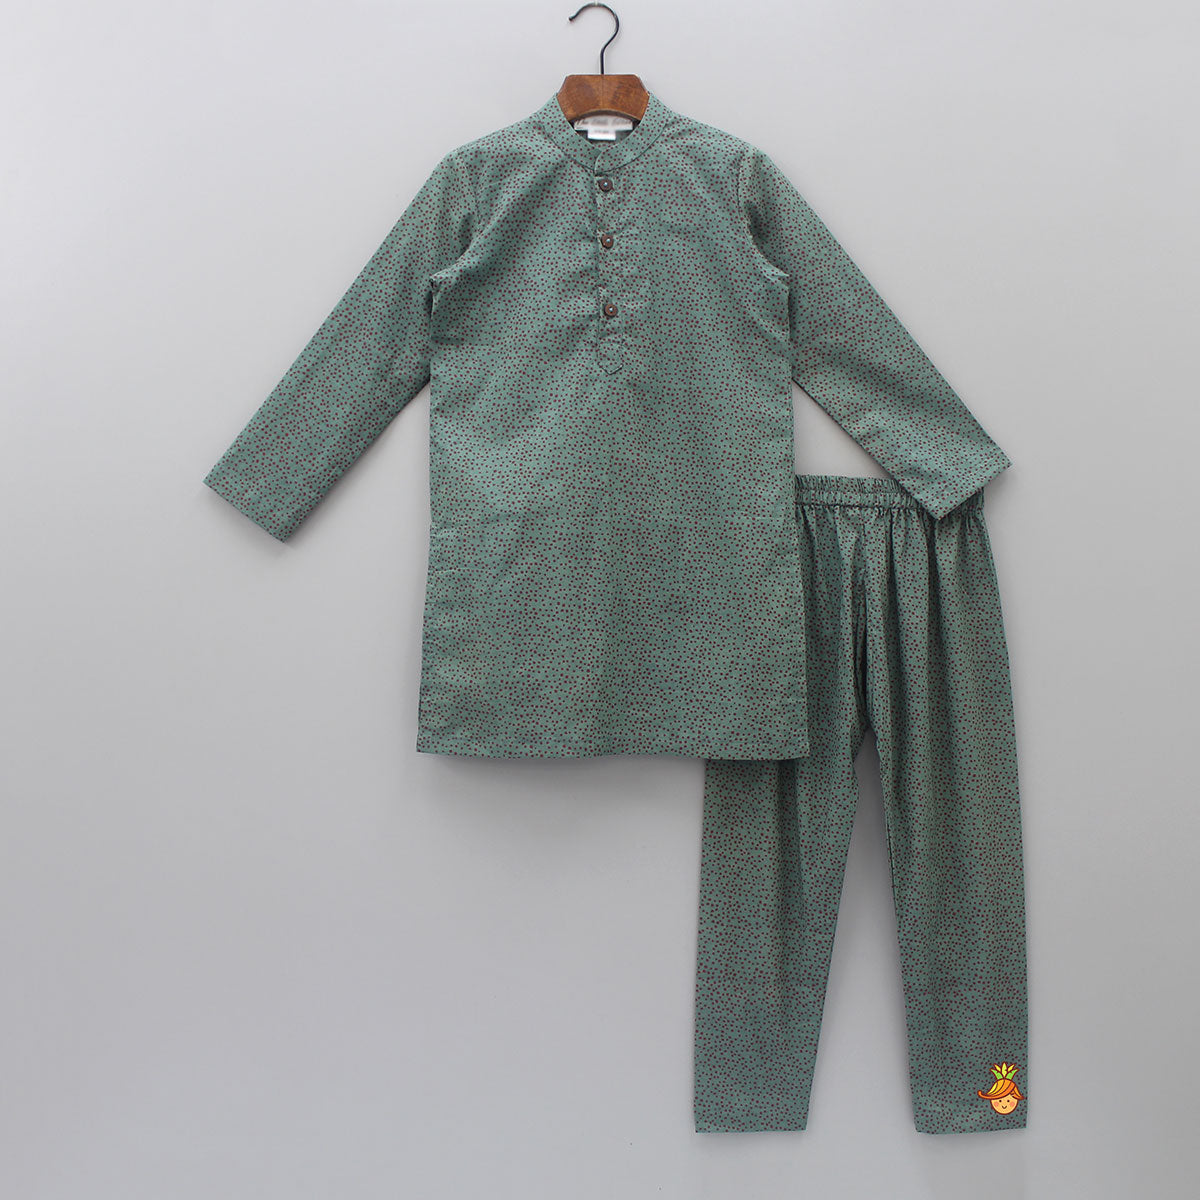 Polka Dots Printed Sage Green Ethnic Kurta With Jacket And Pyjama